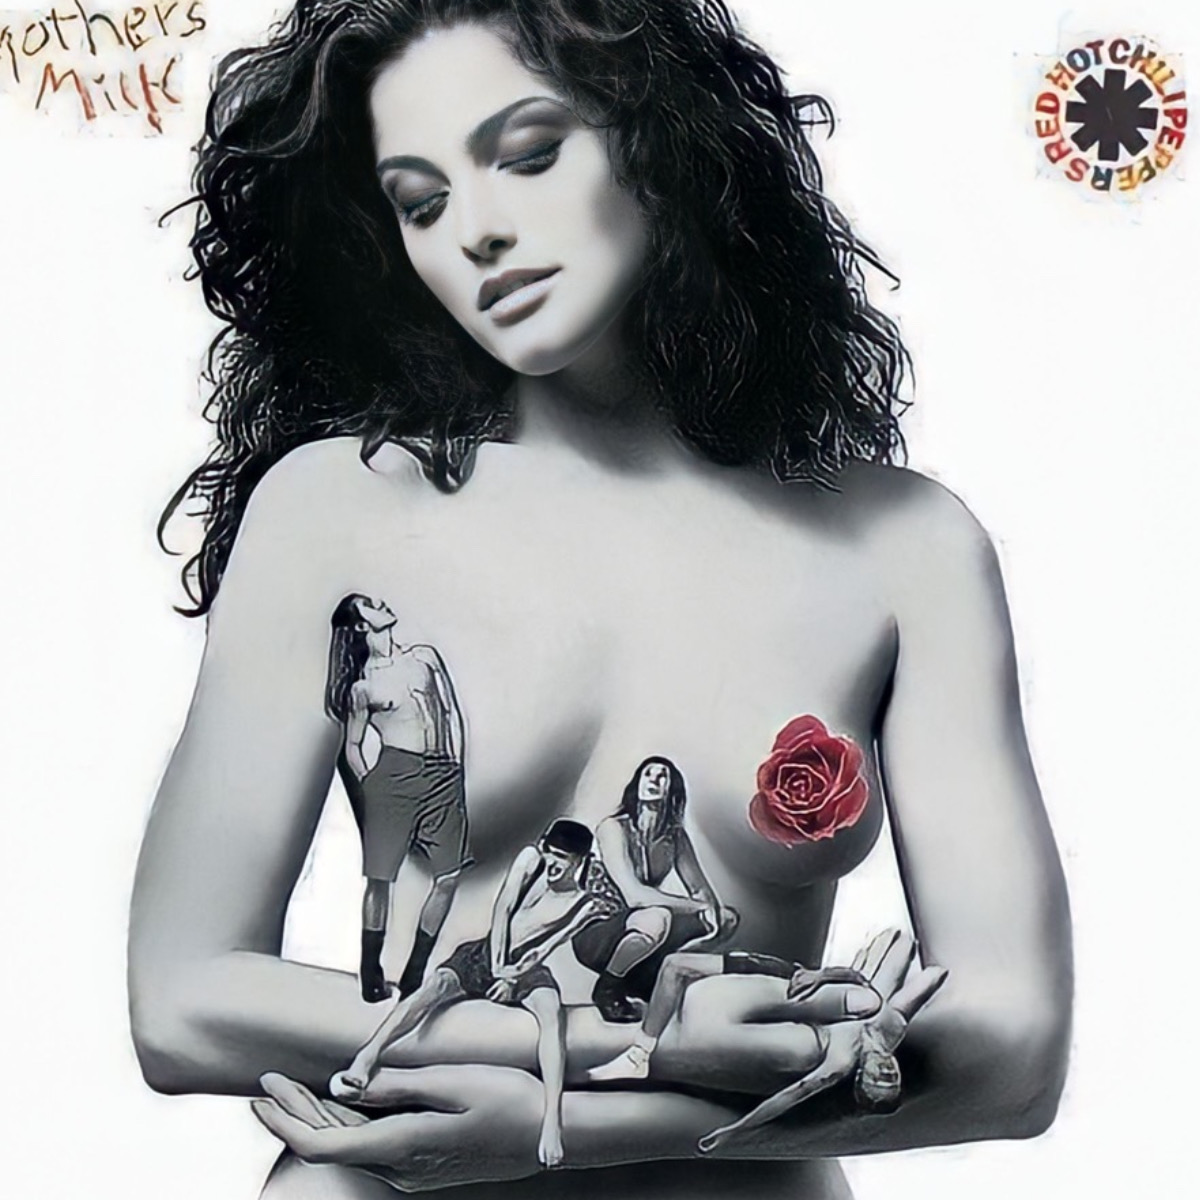 Das Cover des Albums "Mother's Milk" von den Red Hot Chili Peppers.